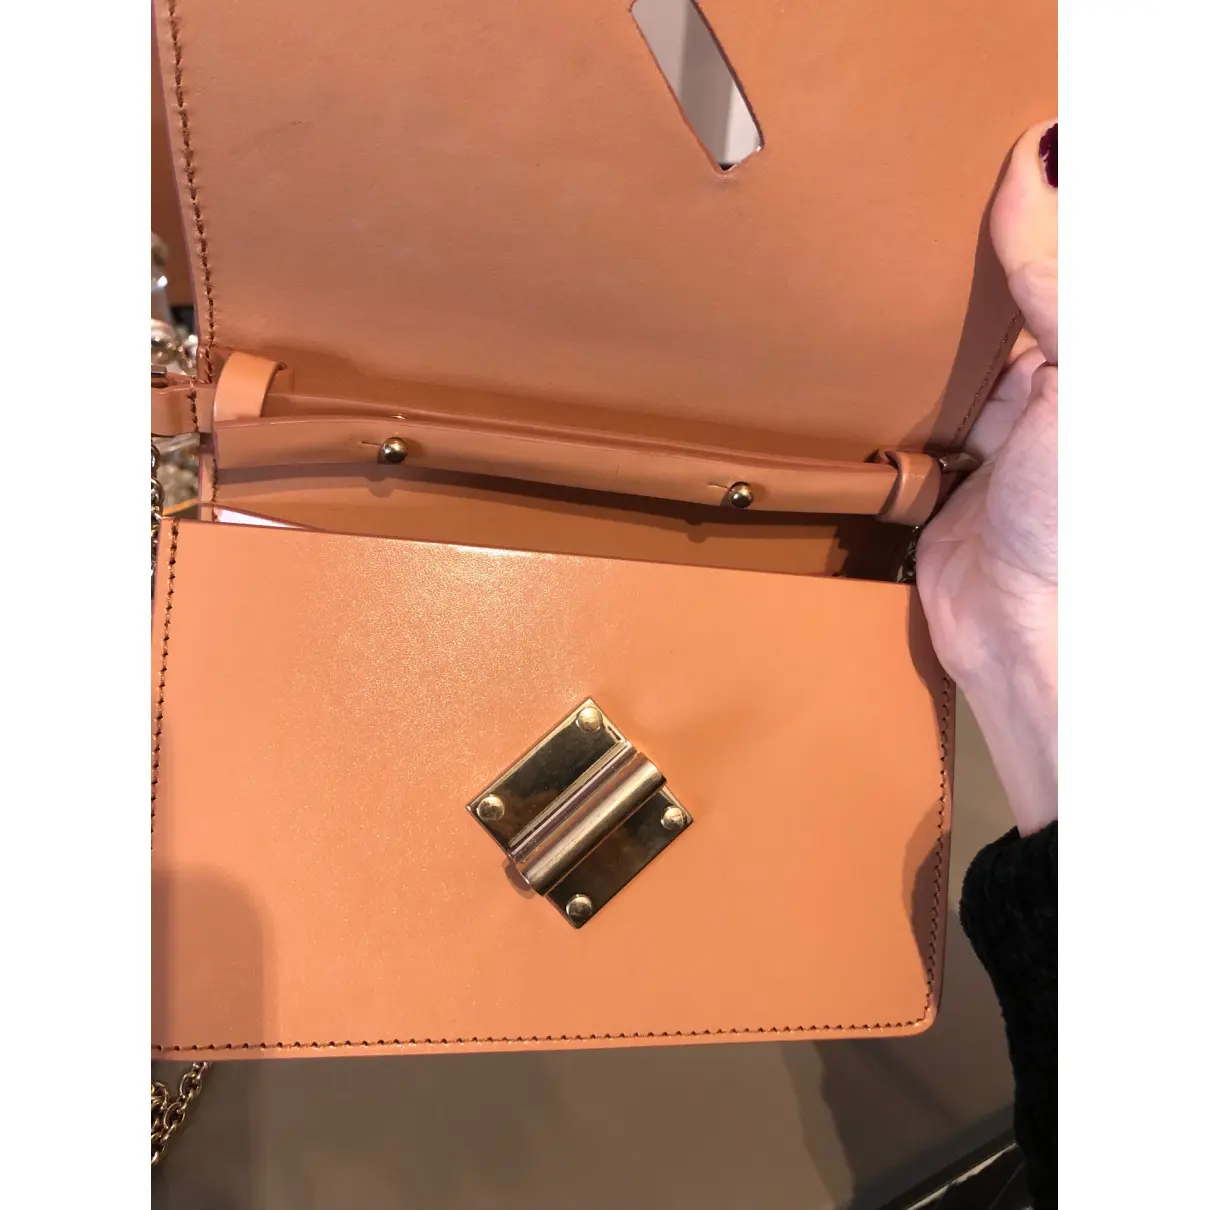 Patent leather crossbody bag Sophie Hulme